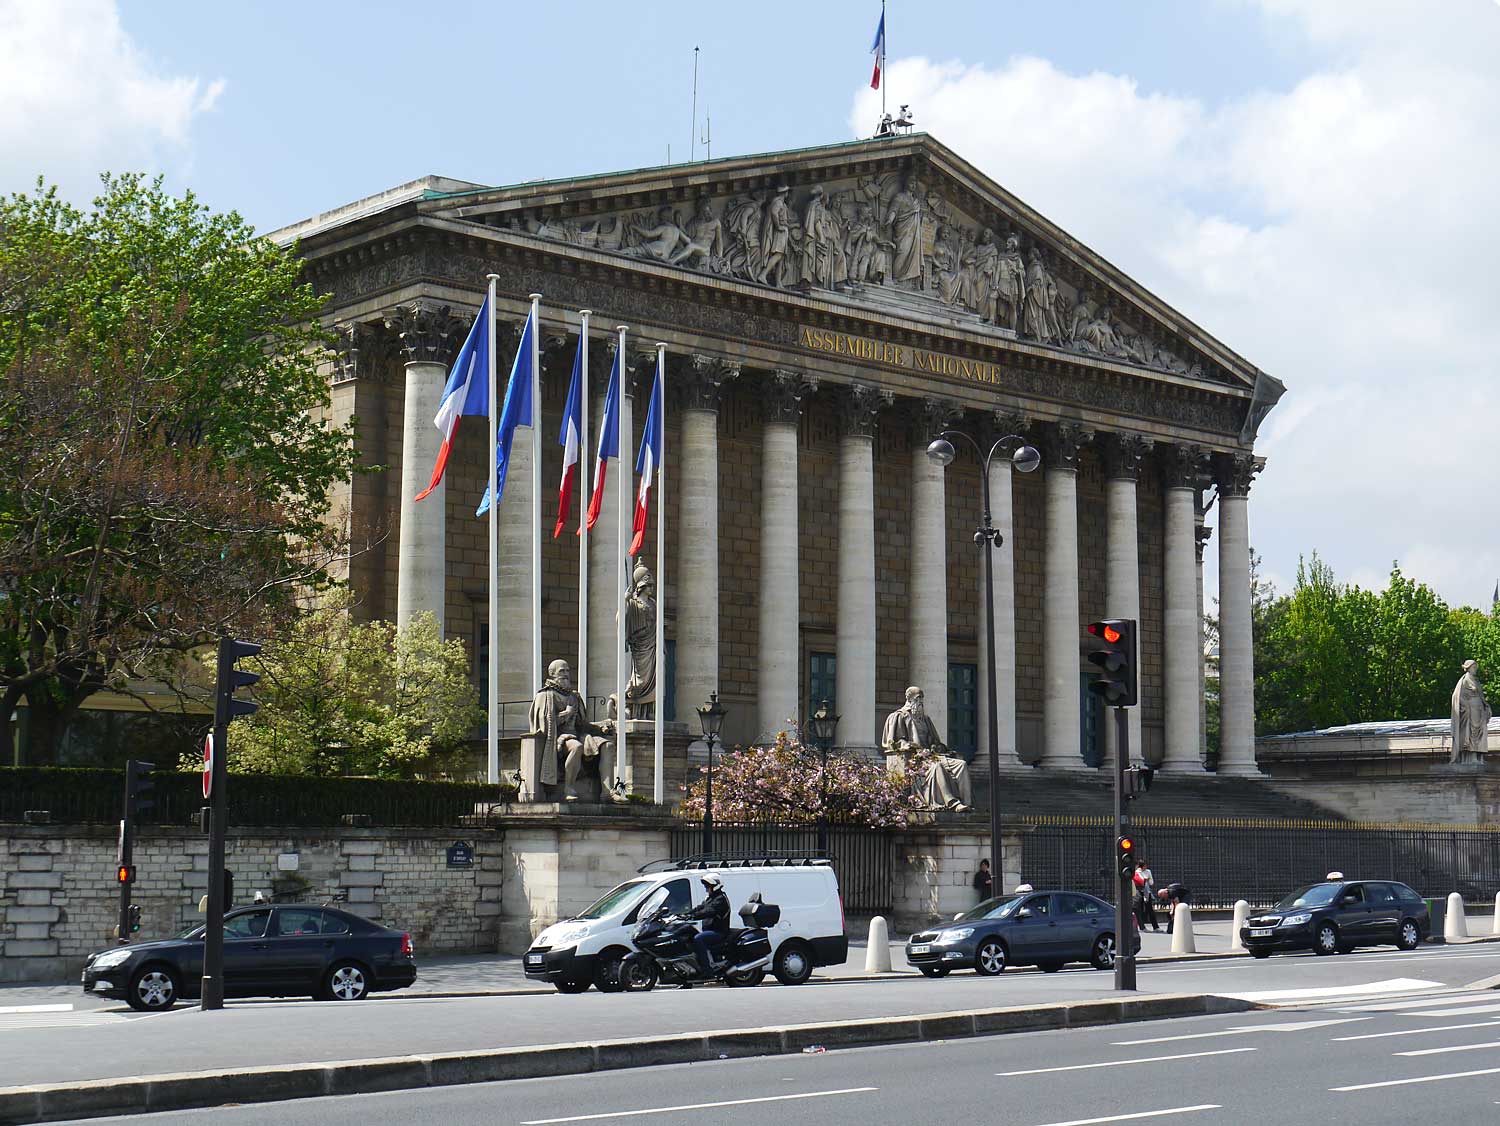 Assemblée Nationale, home of parliament.